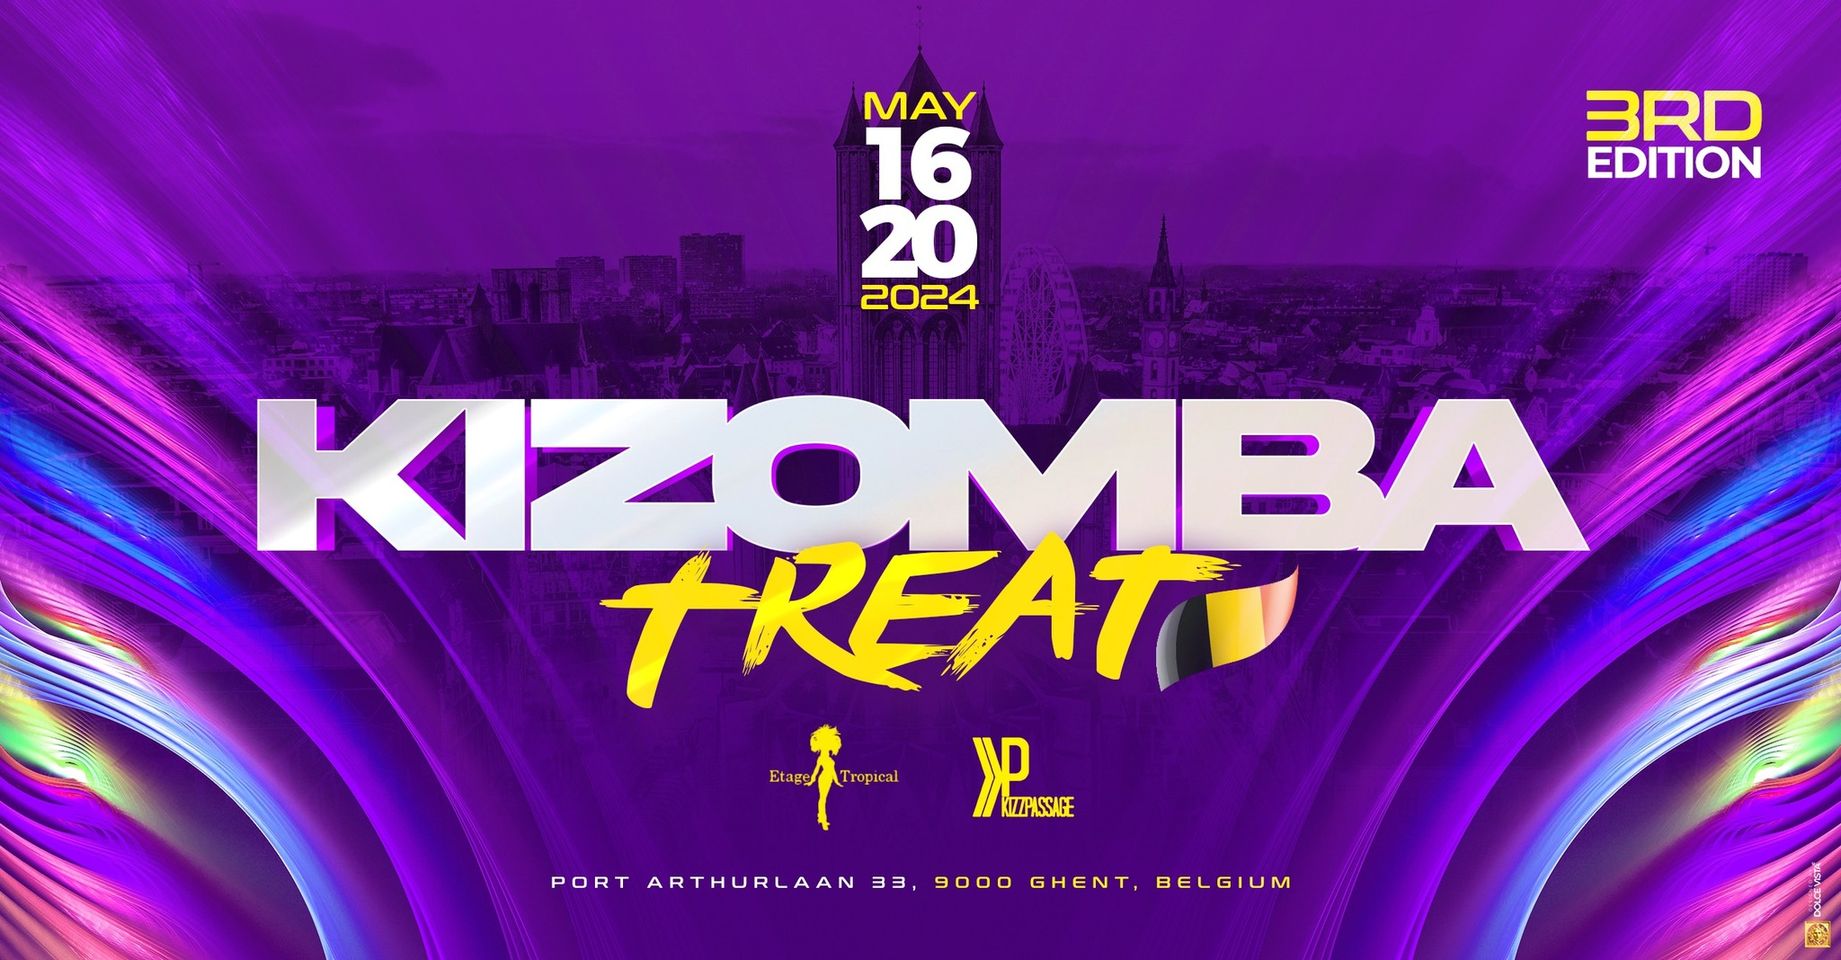 Kizomba Treat Festival 3rd Edition - HM group